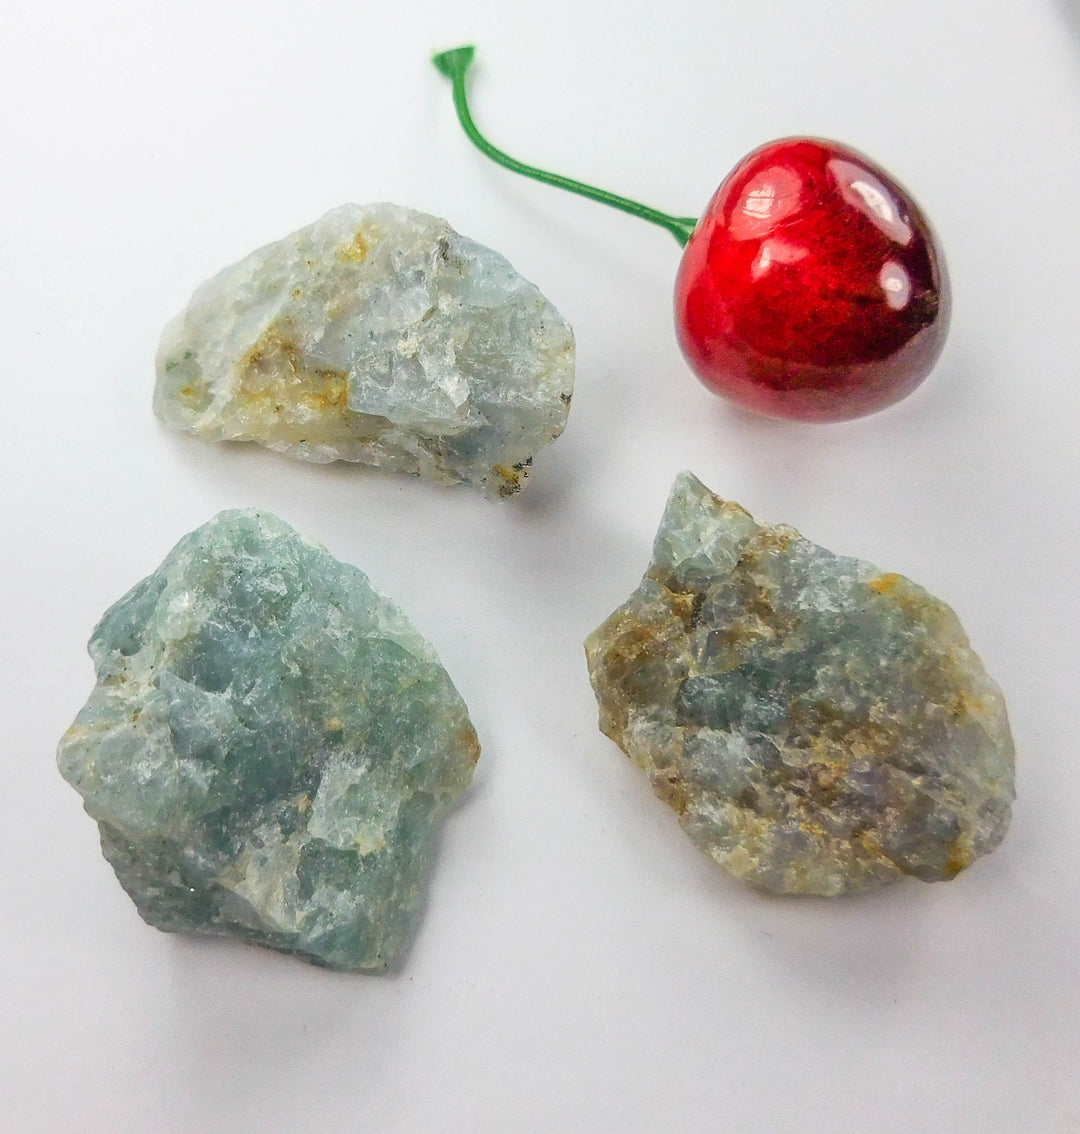 Sky Blue Quartz Crystal (1/2 lb) 8 oz Bulk Wholesale Lot Half Pound Stones Raw Gemstones Rough Natural